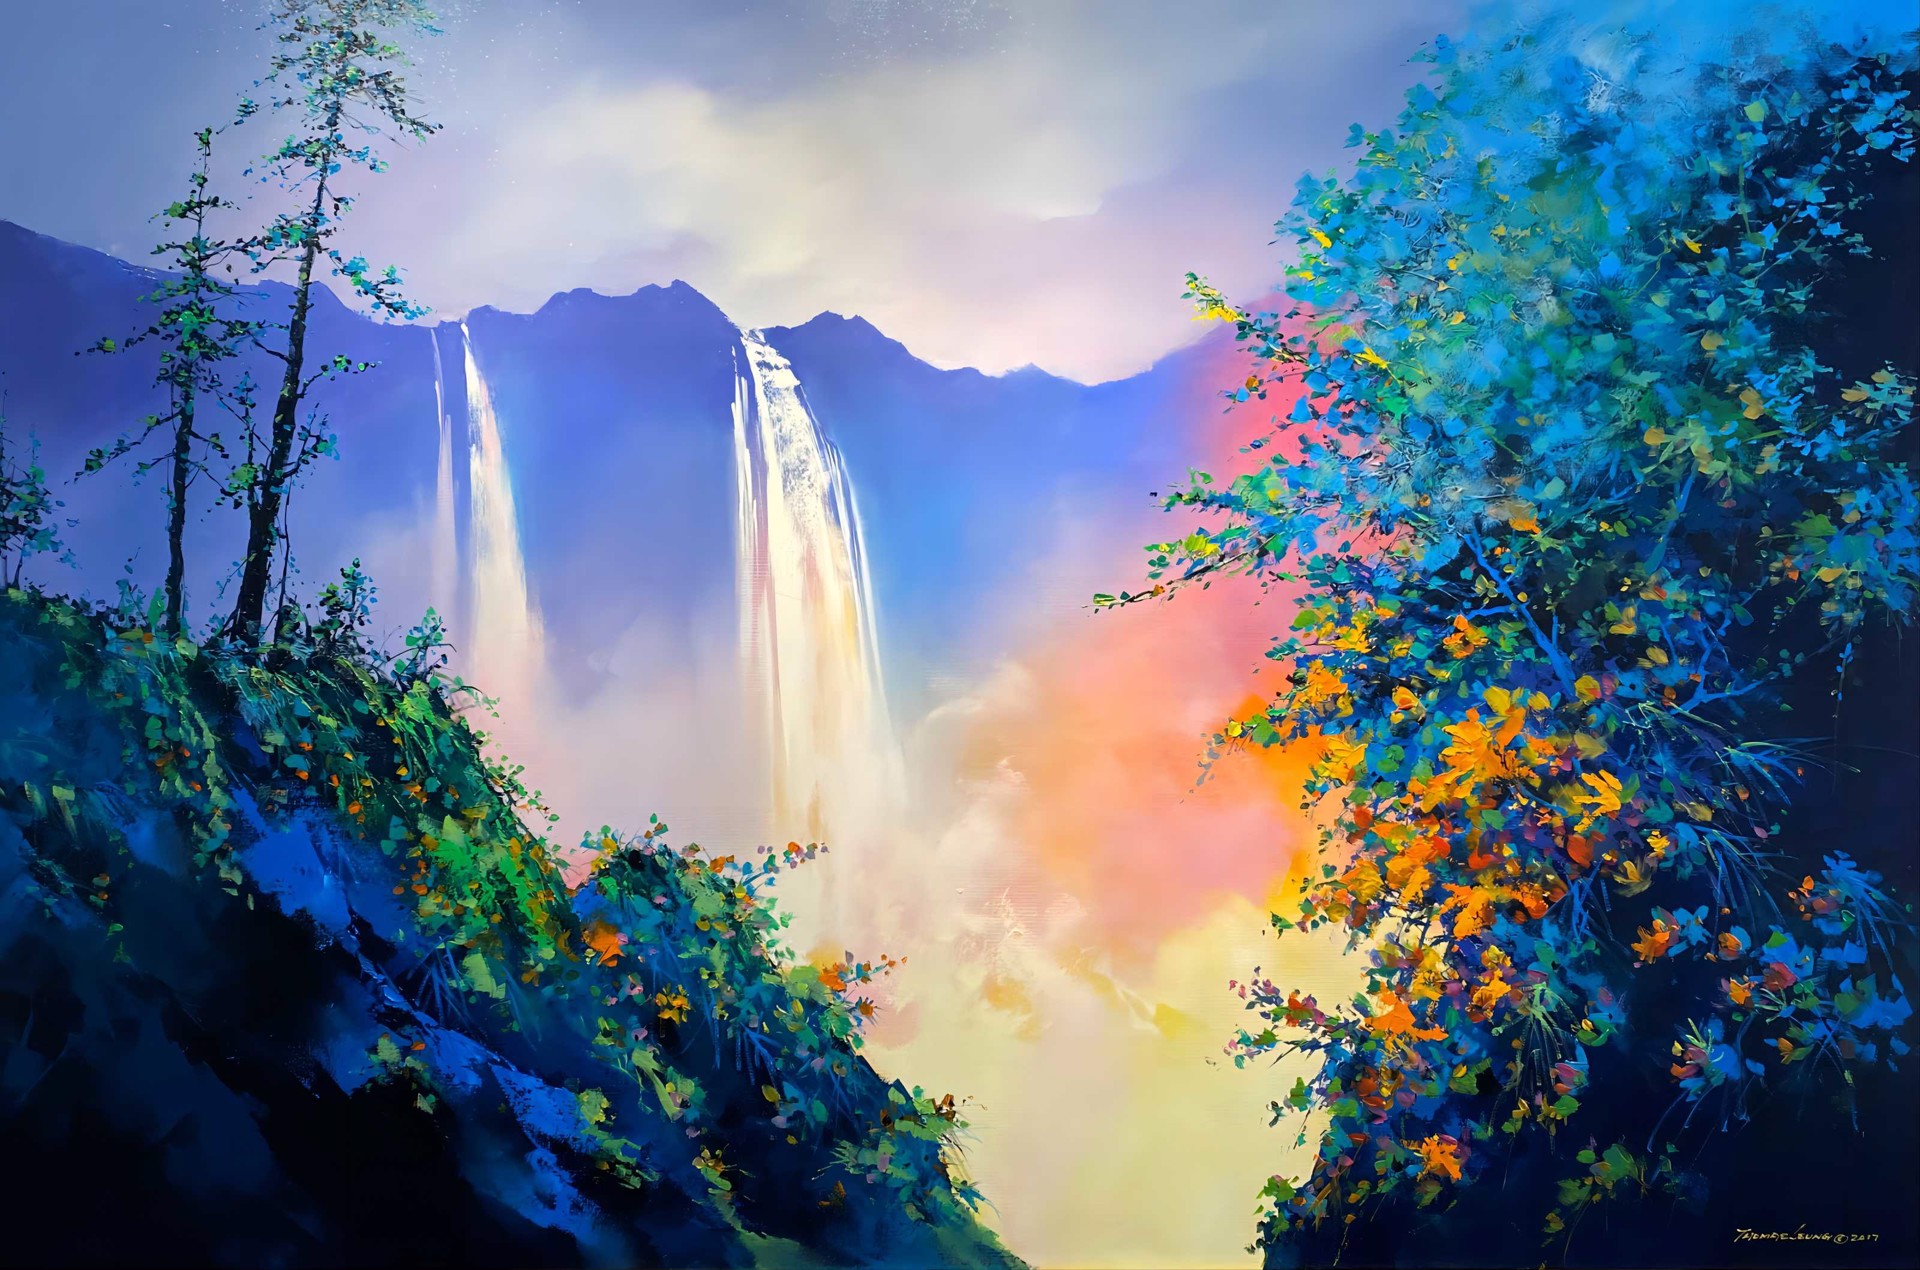 Summertime Falls by Thomas Leung